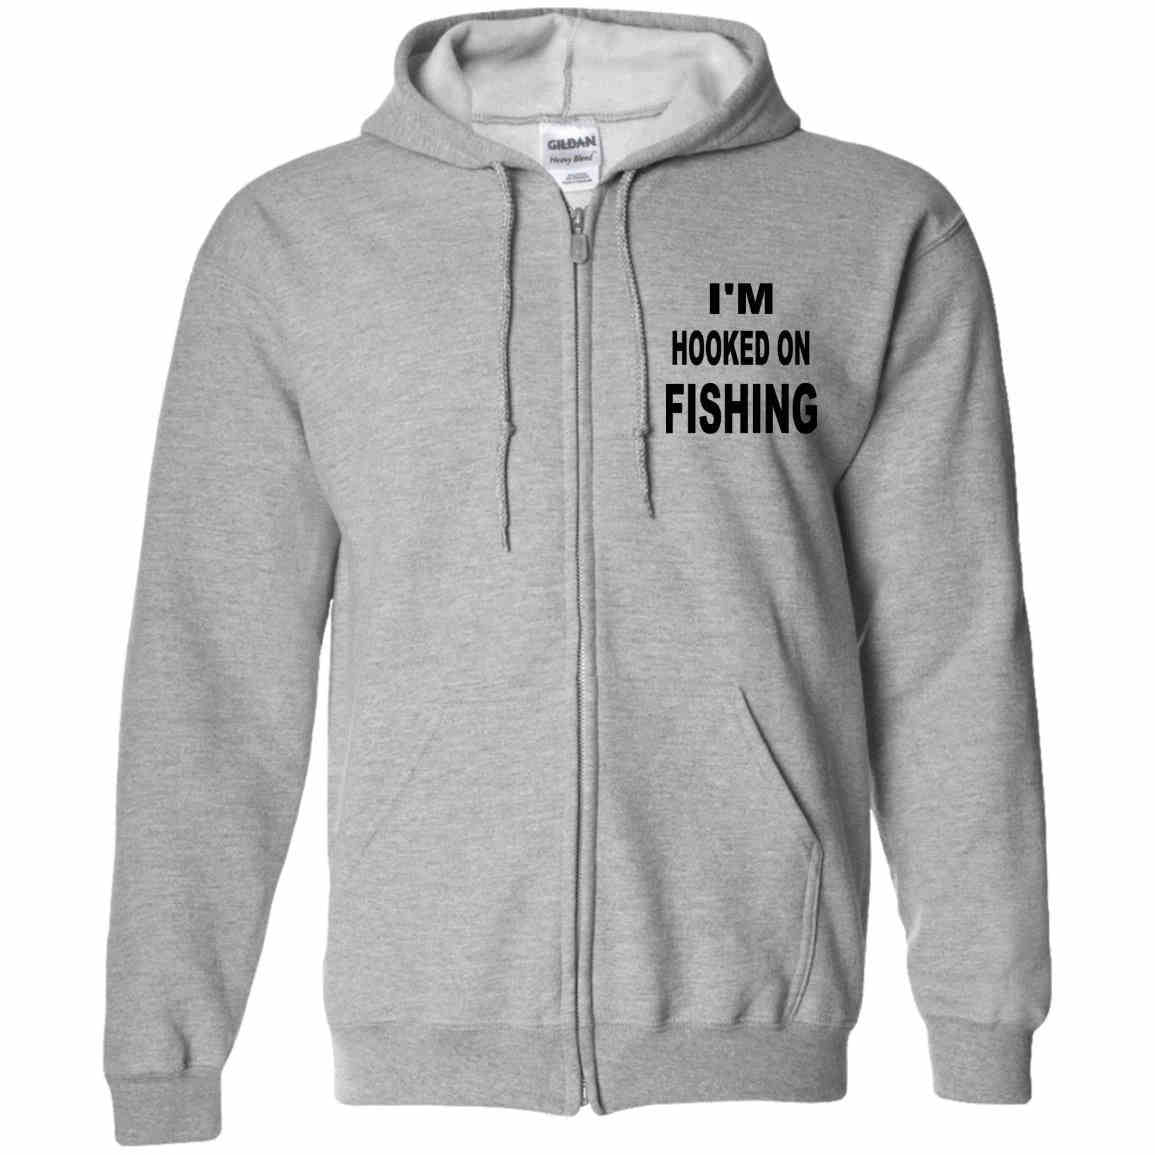 I'm hooked on fishing zip up hoodie b sport grey